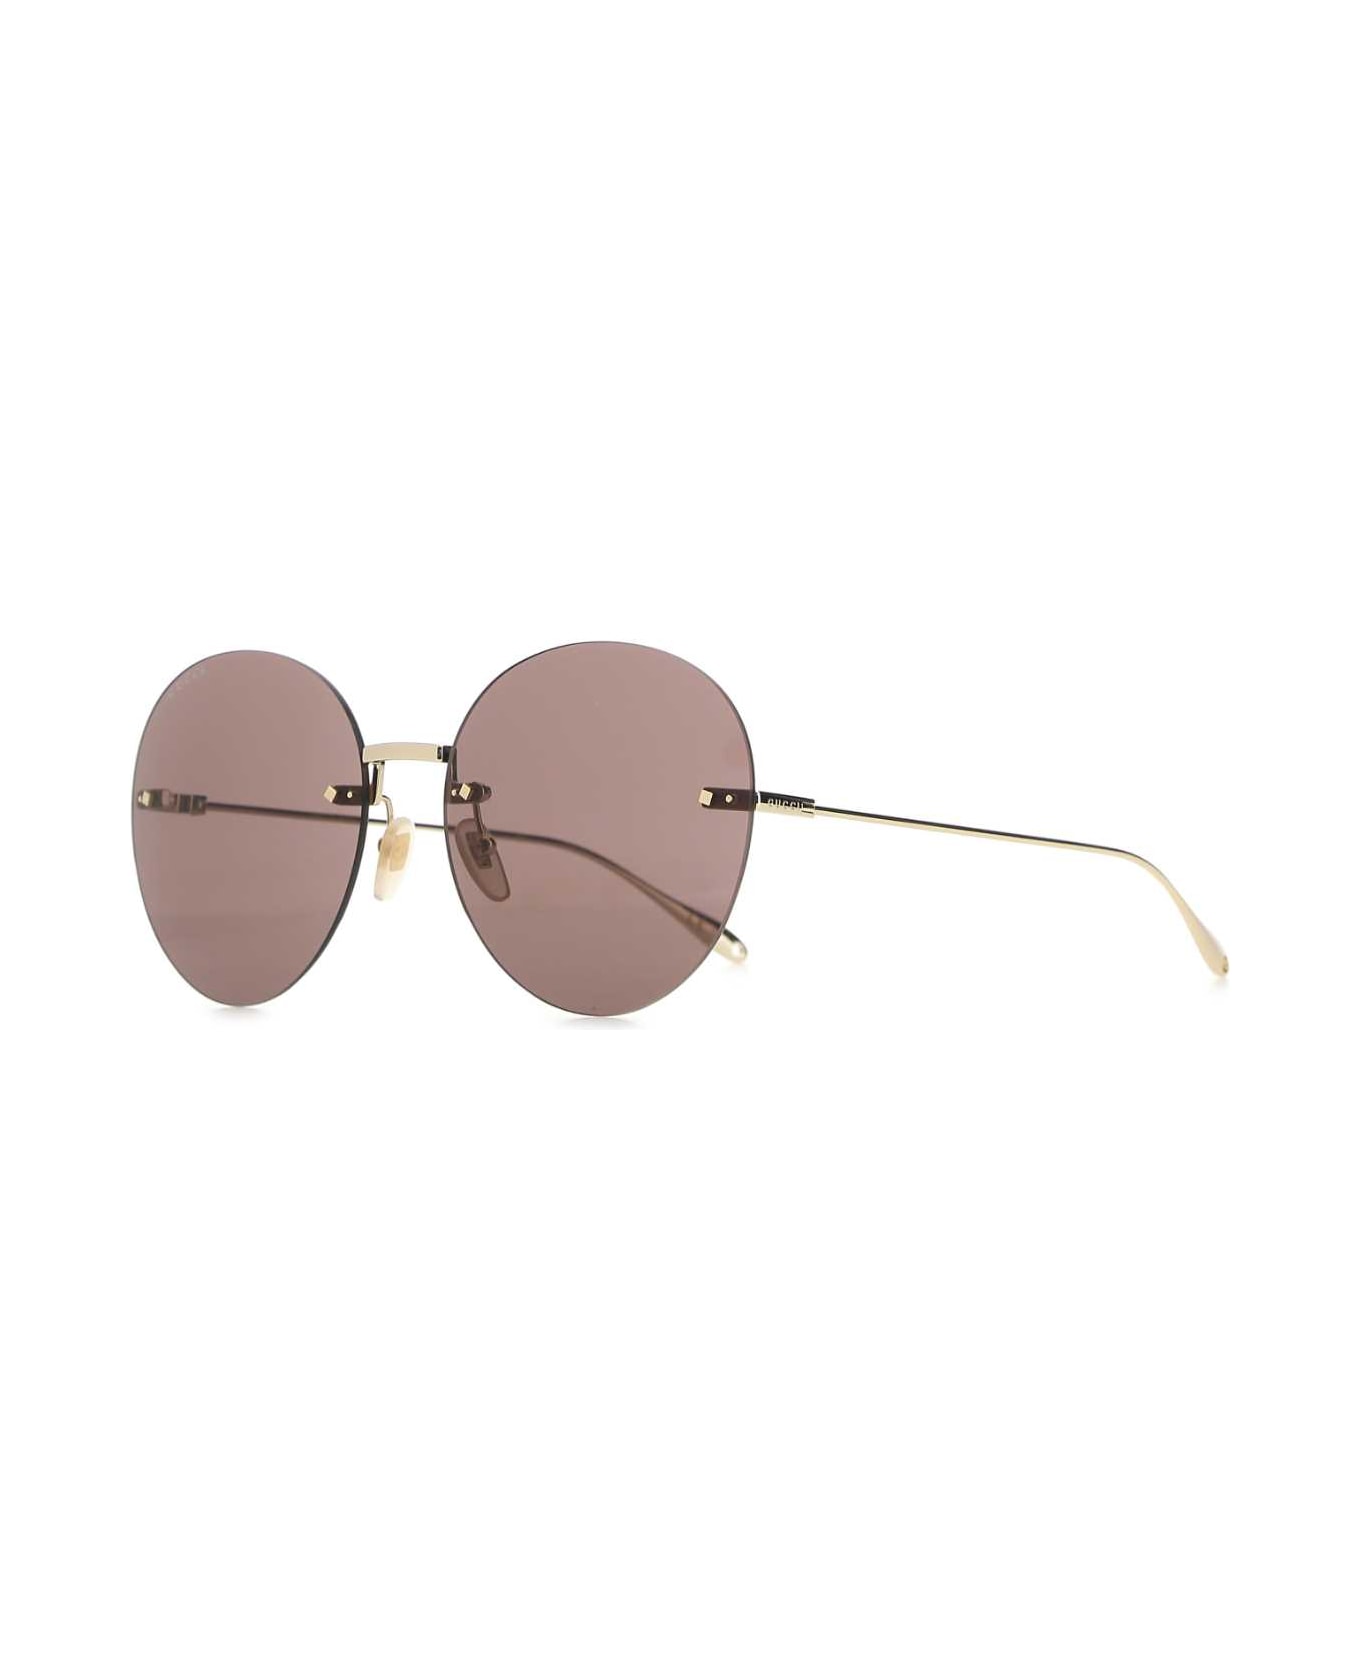 Gucci Gold Metal Sunglasses - 8021 サングラス